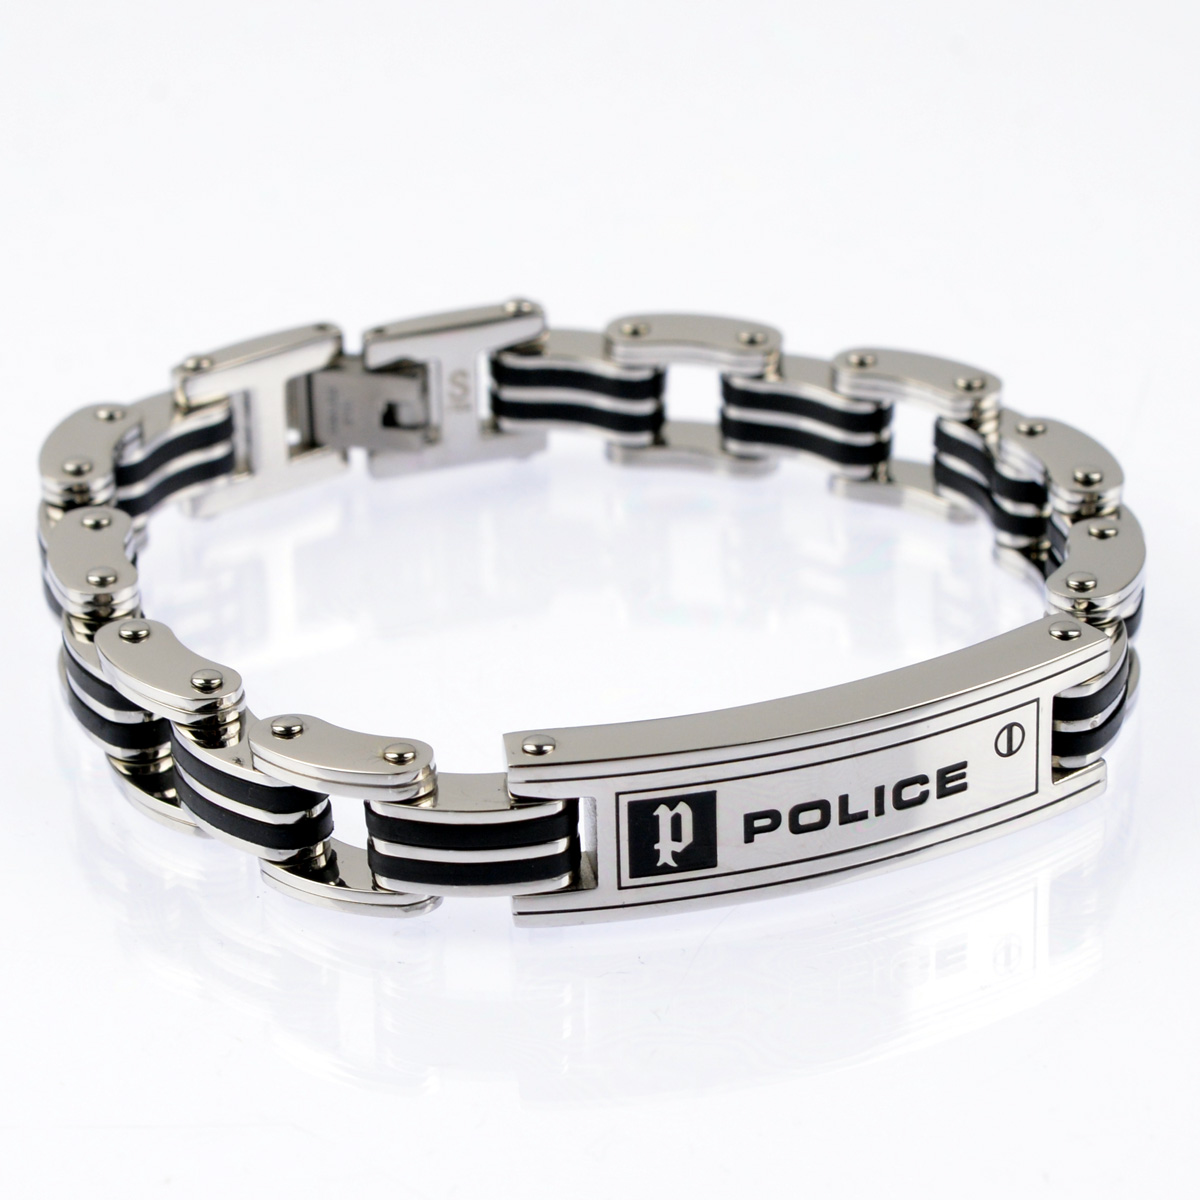 http://www.police.ne.jp/images/police-bracelet-18cm-00.jpg